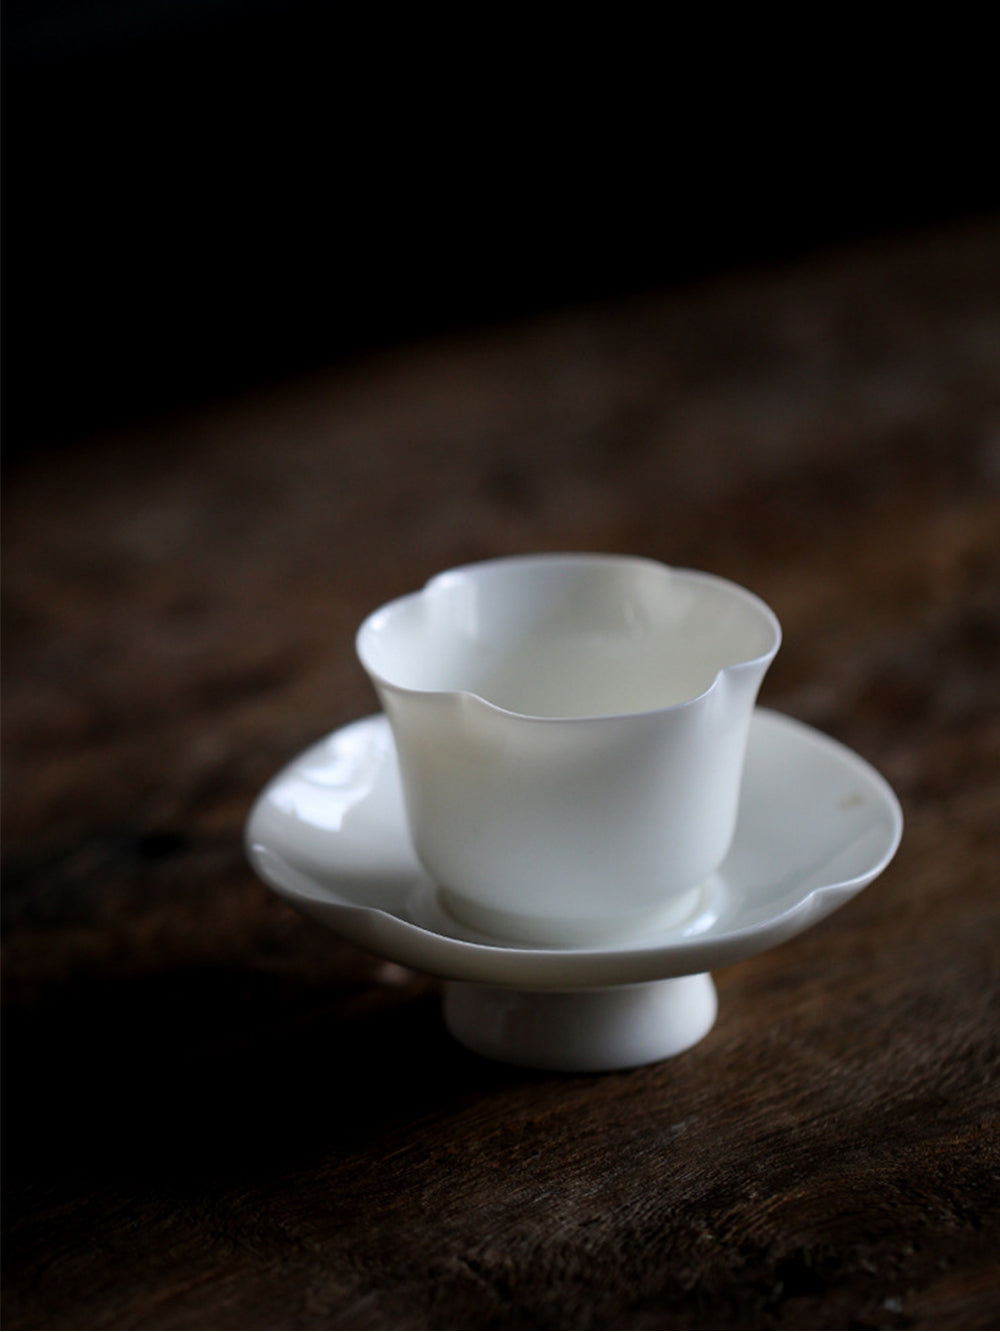 IwaiLoft 自然の一風景を思わせる湯呑み 湯呑 フリーカップ そばちょこ コップ 仙茶 茶器 湯のみ 湯呑み お茶 デザートカップ 来 –  茶器・コーヒー用品を選ぶ - IwaiLoft